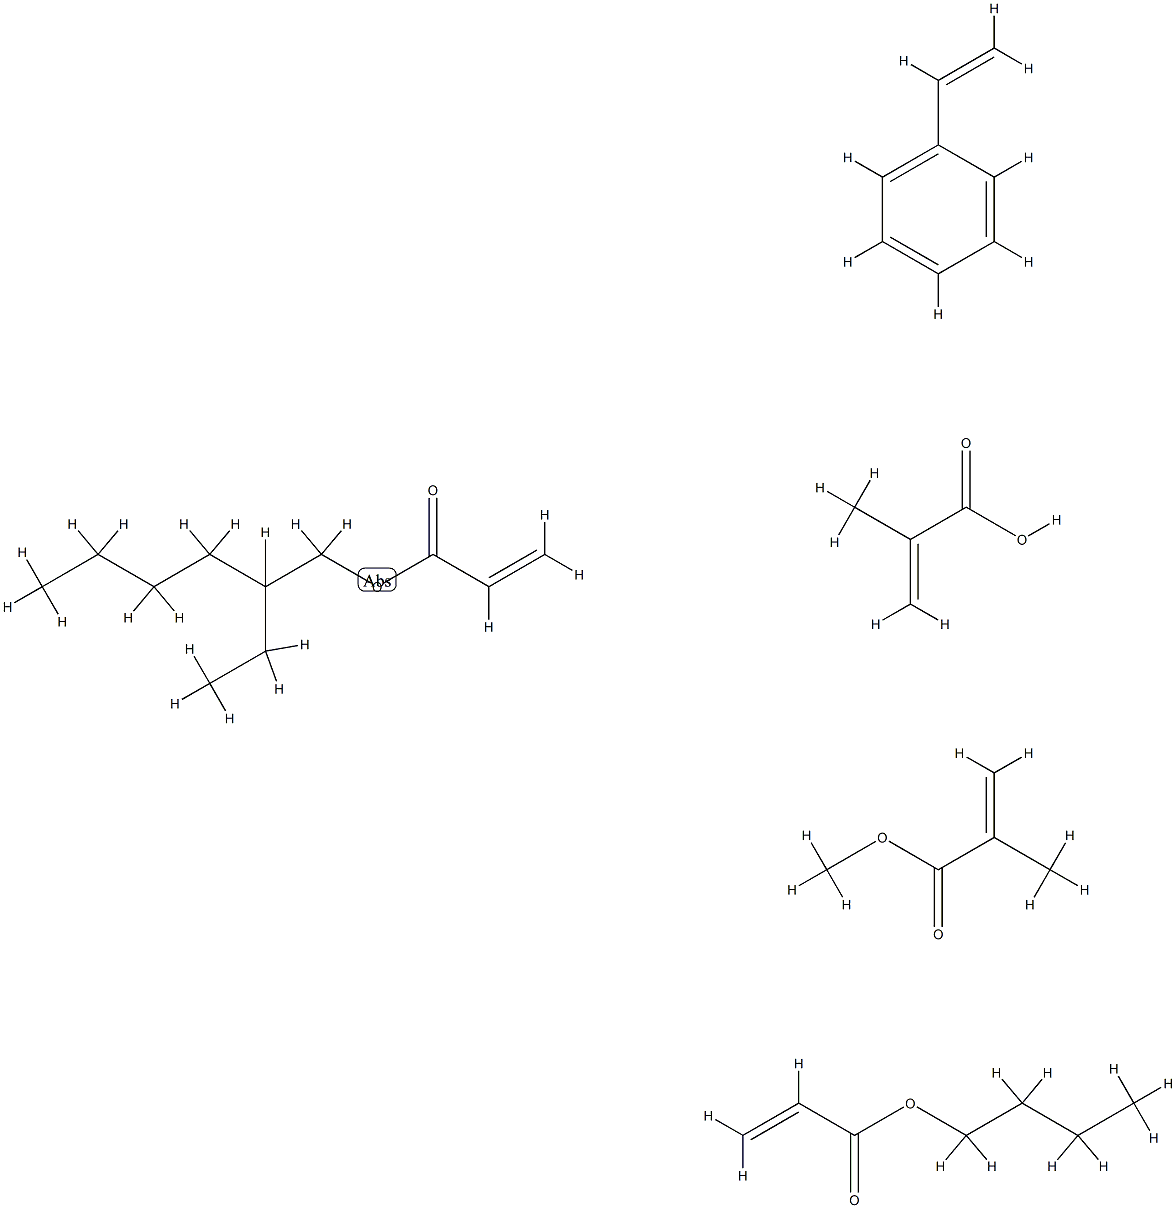 82539-93-3 2-Propenoic acid, 2-methyl-, polymer with butyl 2-propenoate, ethenylbenzene, 2-ethylhexyl 2-propenoate and methyl 2-methyl-2-propenoate